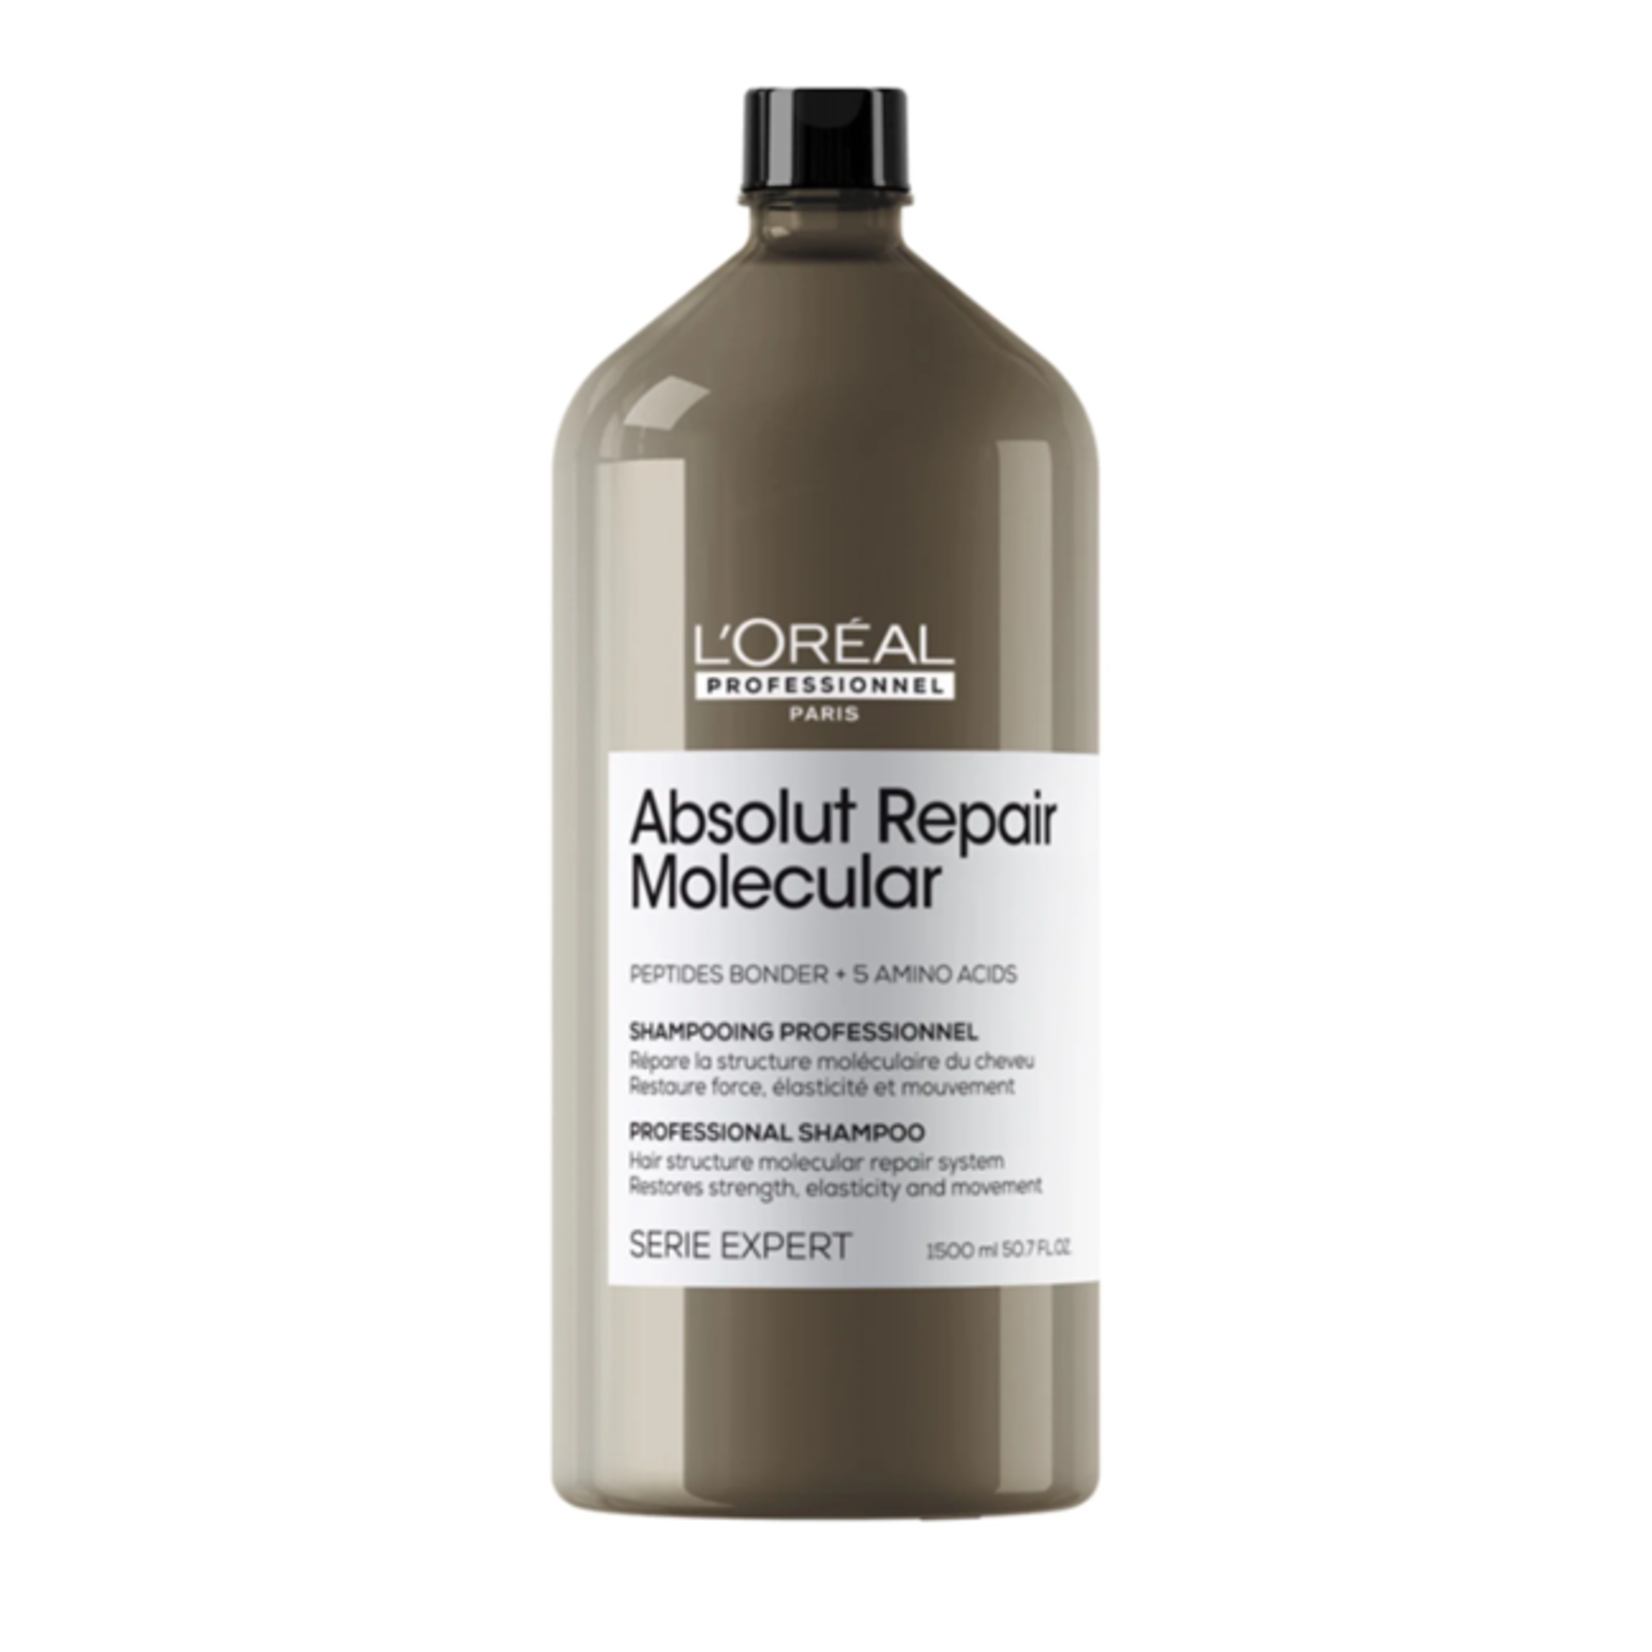 L'Oréal L'Oréal Professionnel - Absolut repair molecular - Shampoo 1500ml